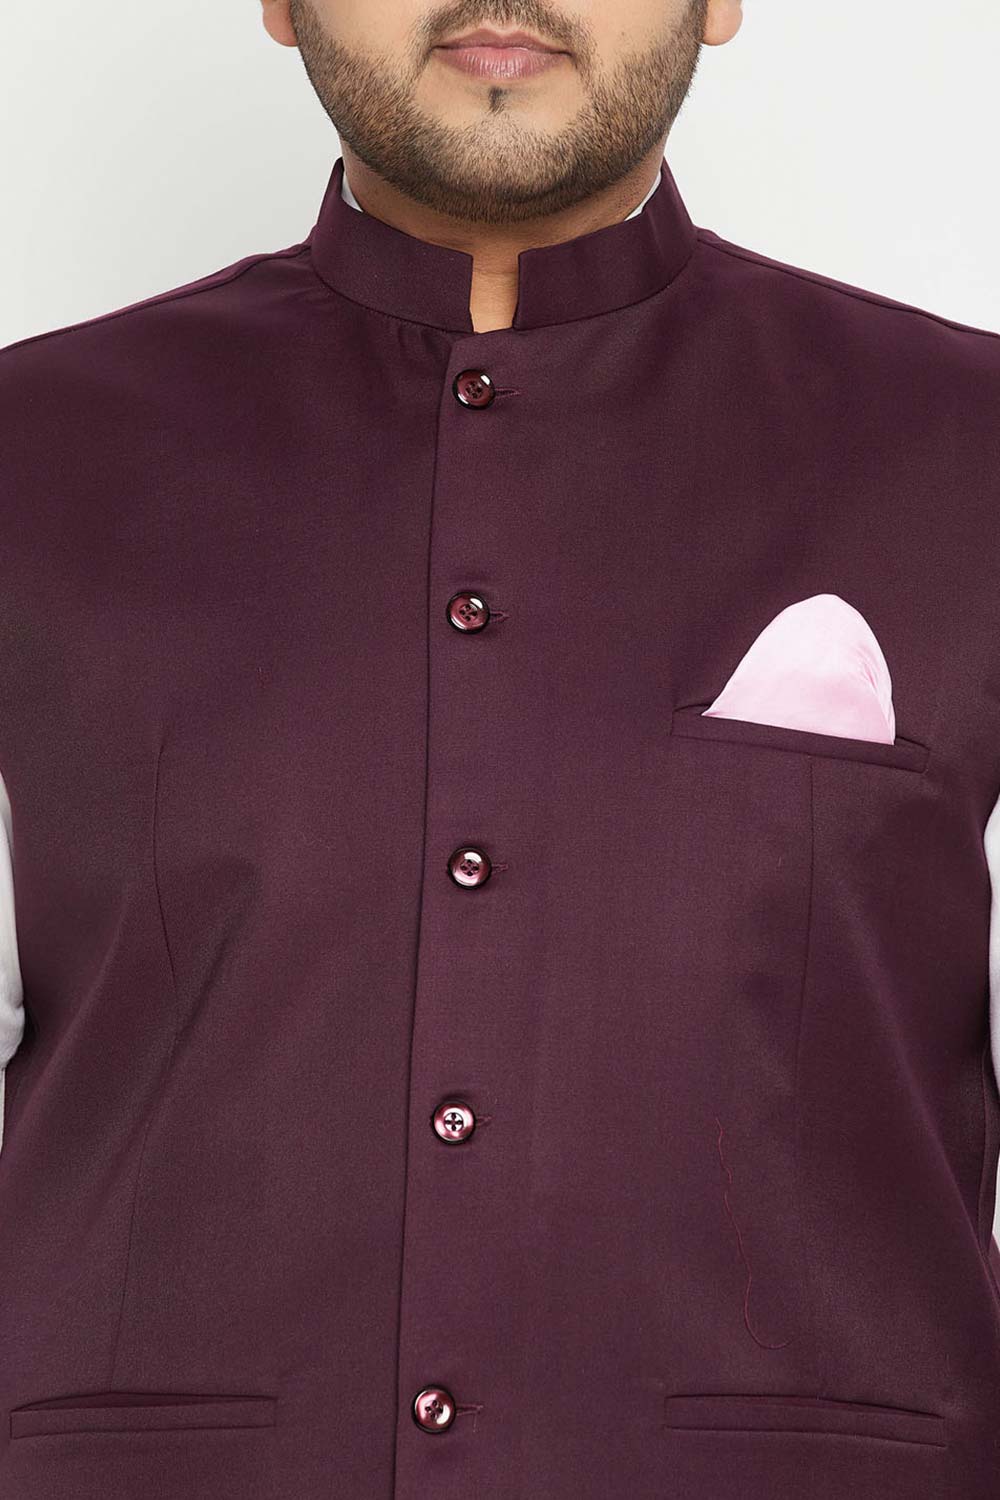 Buy Men's Cotton Silk Blend Solid Nehru Jacket in Maroon - Zoom in